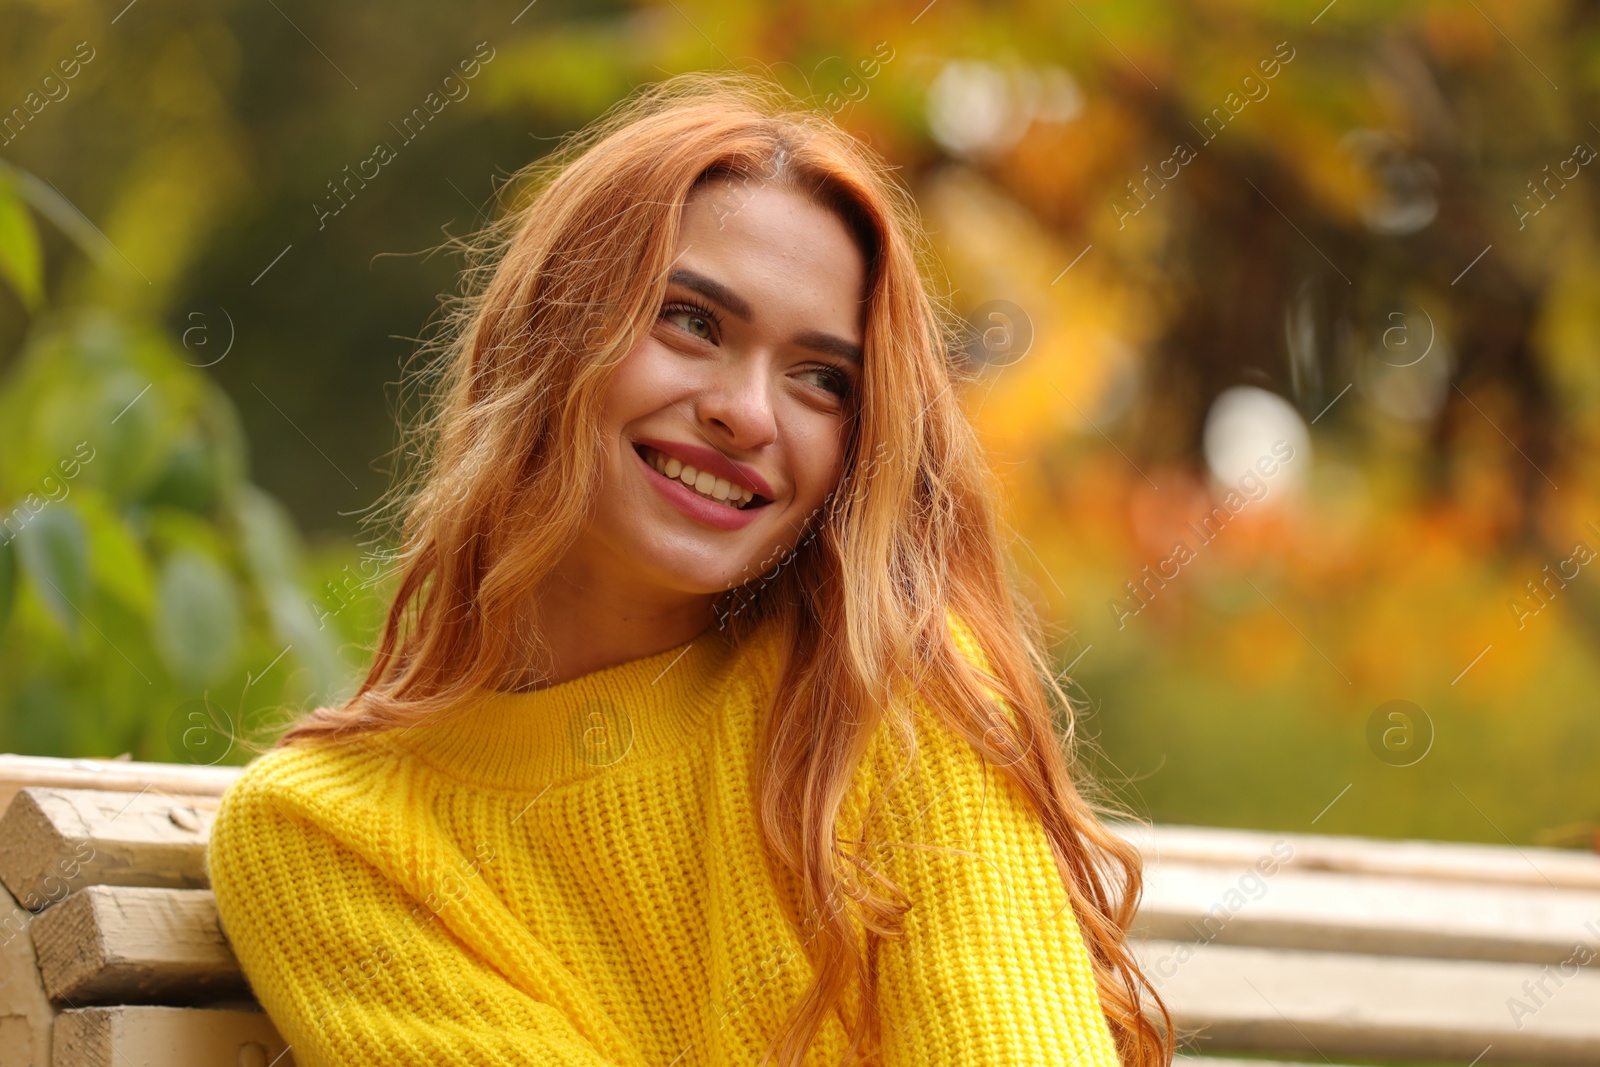 Photo of Portrait of smiling woman enjoying autumn outdoors